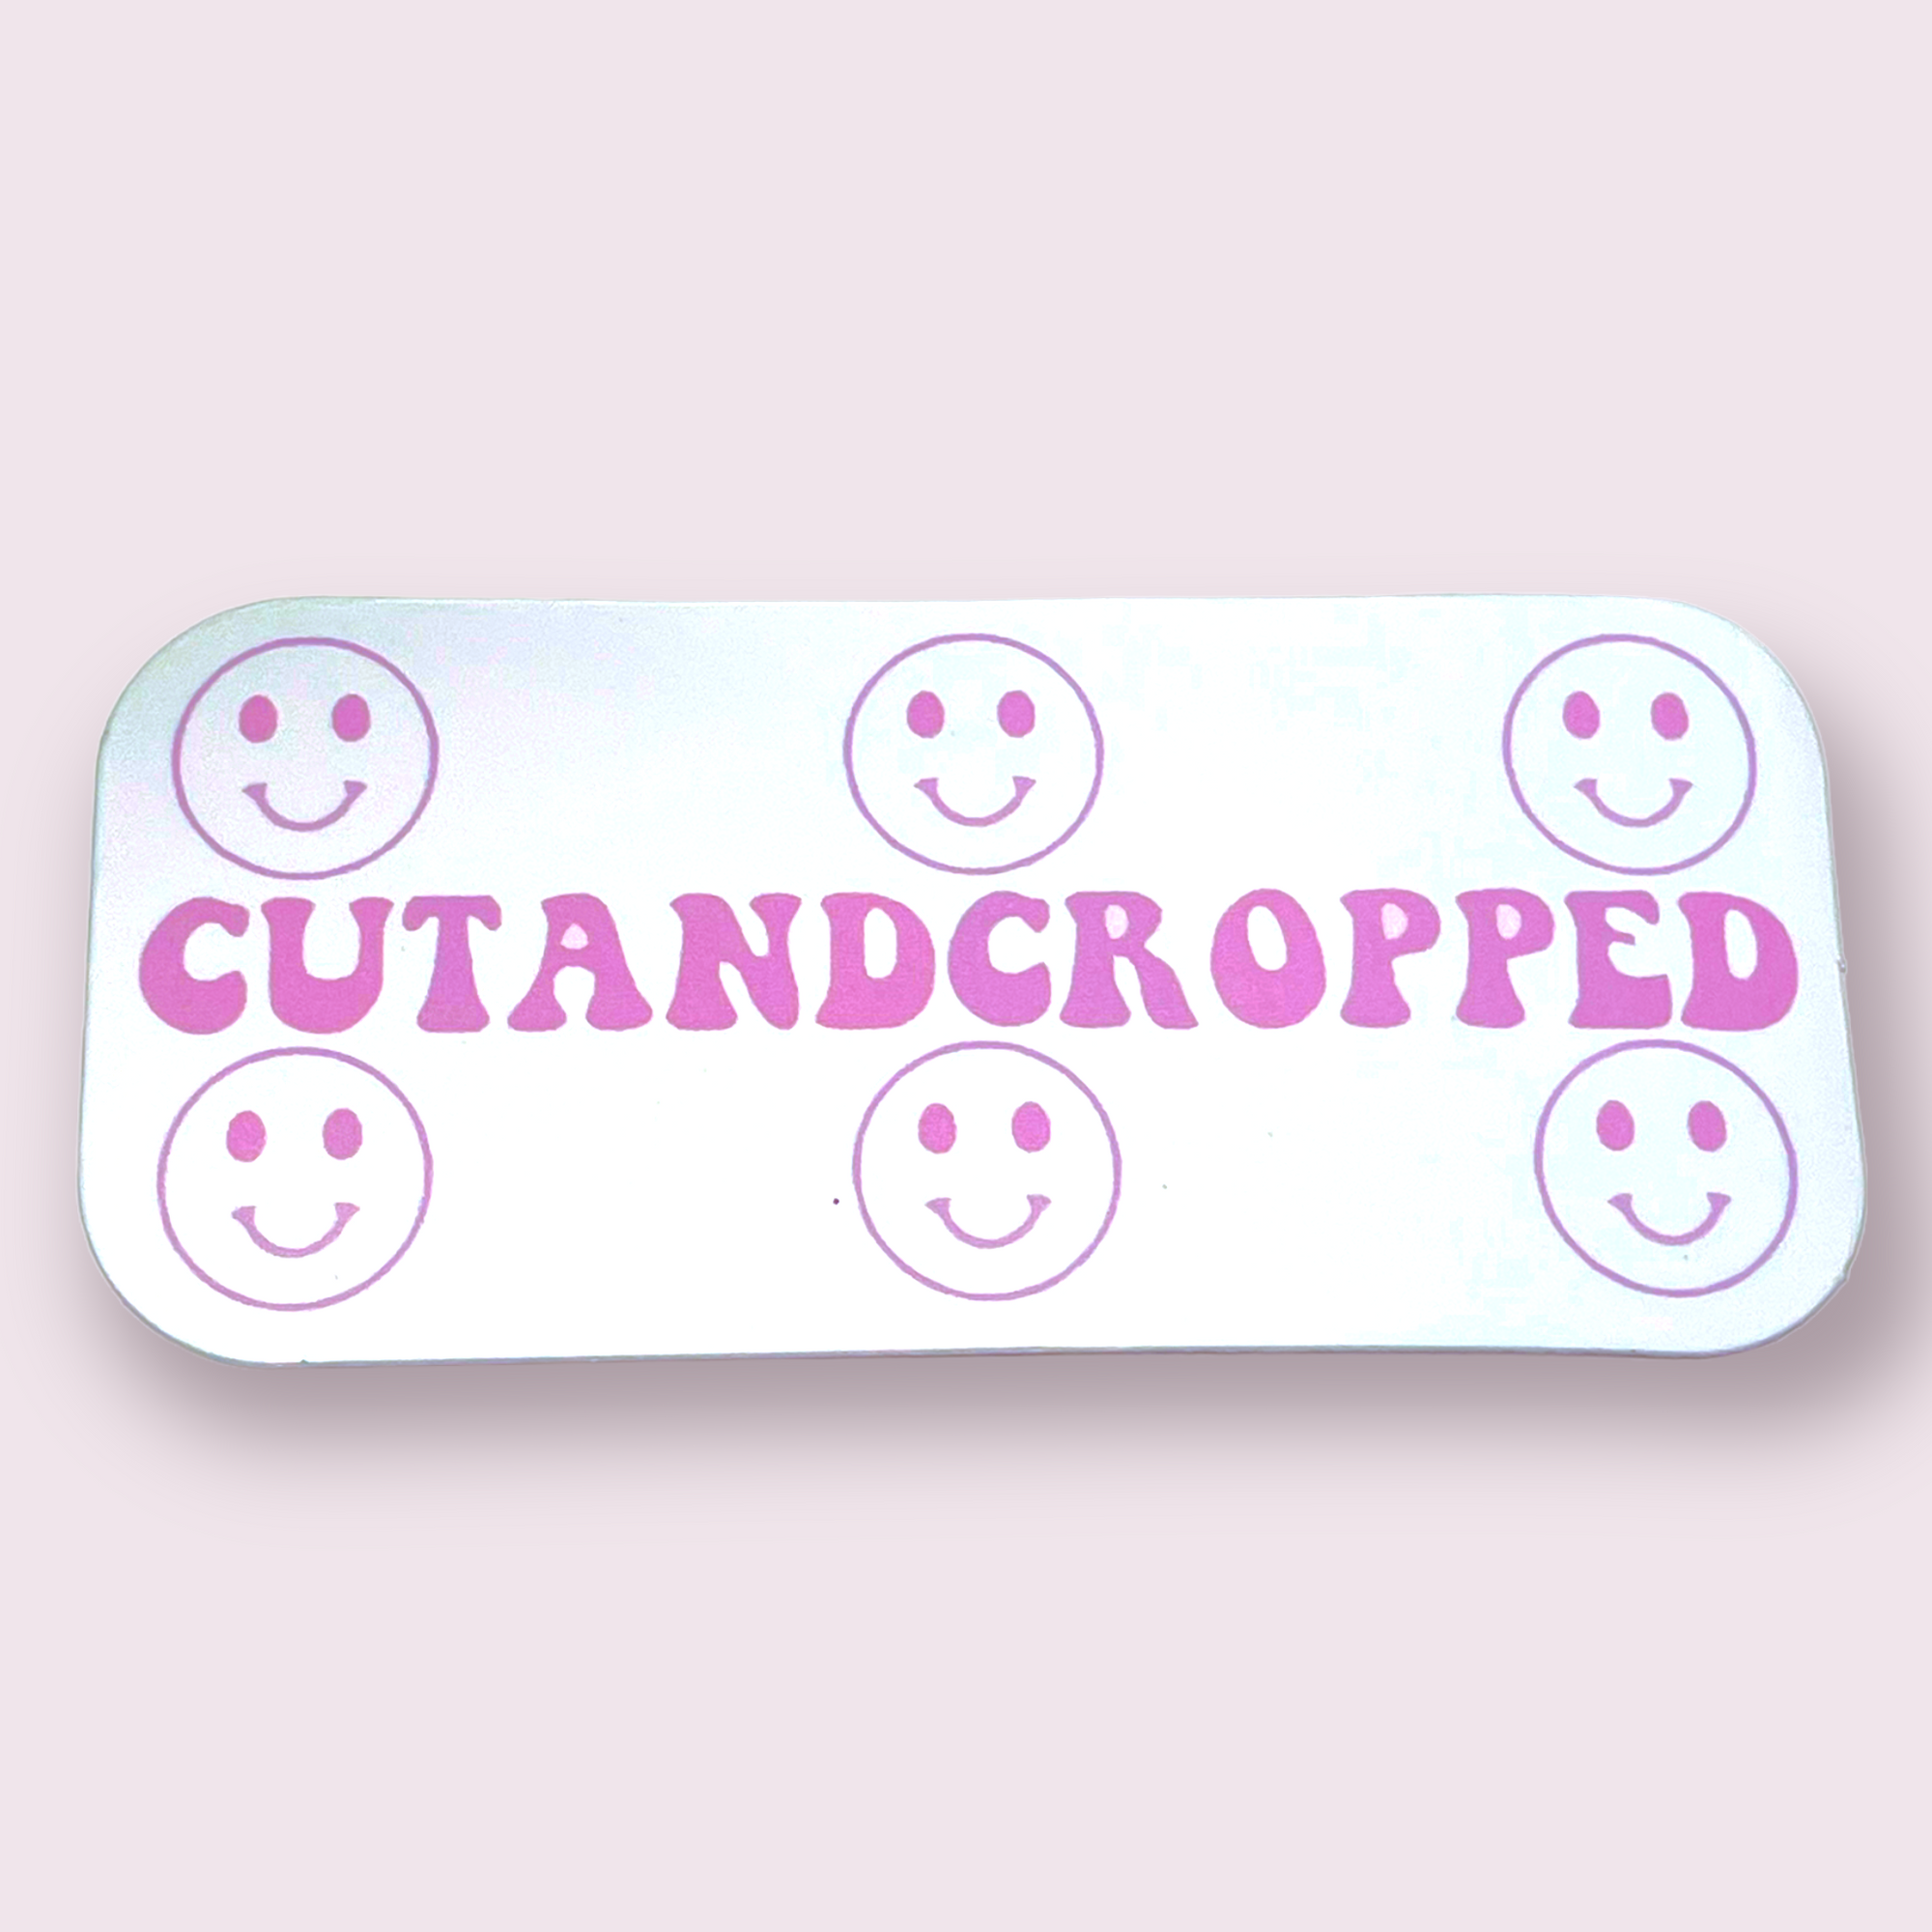 CUTANDCROPPED Preppy Sticker Pack